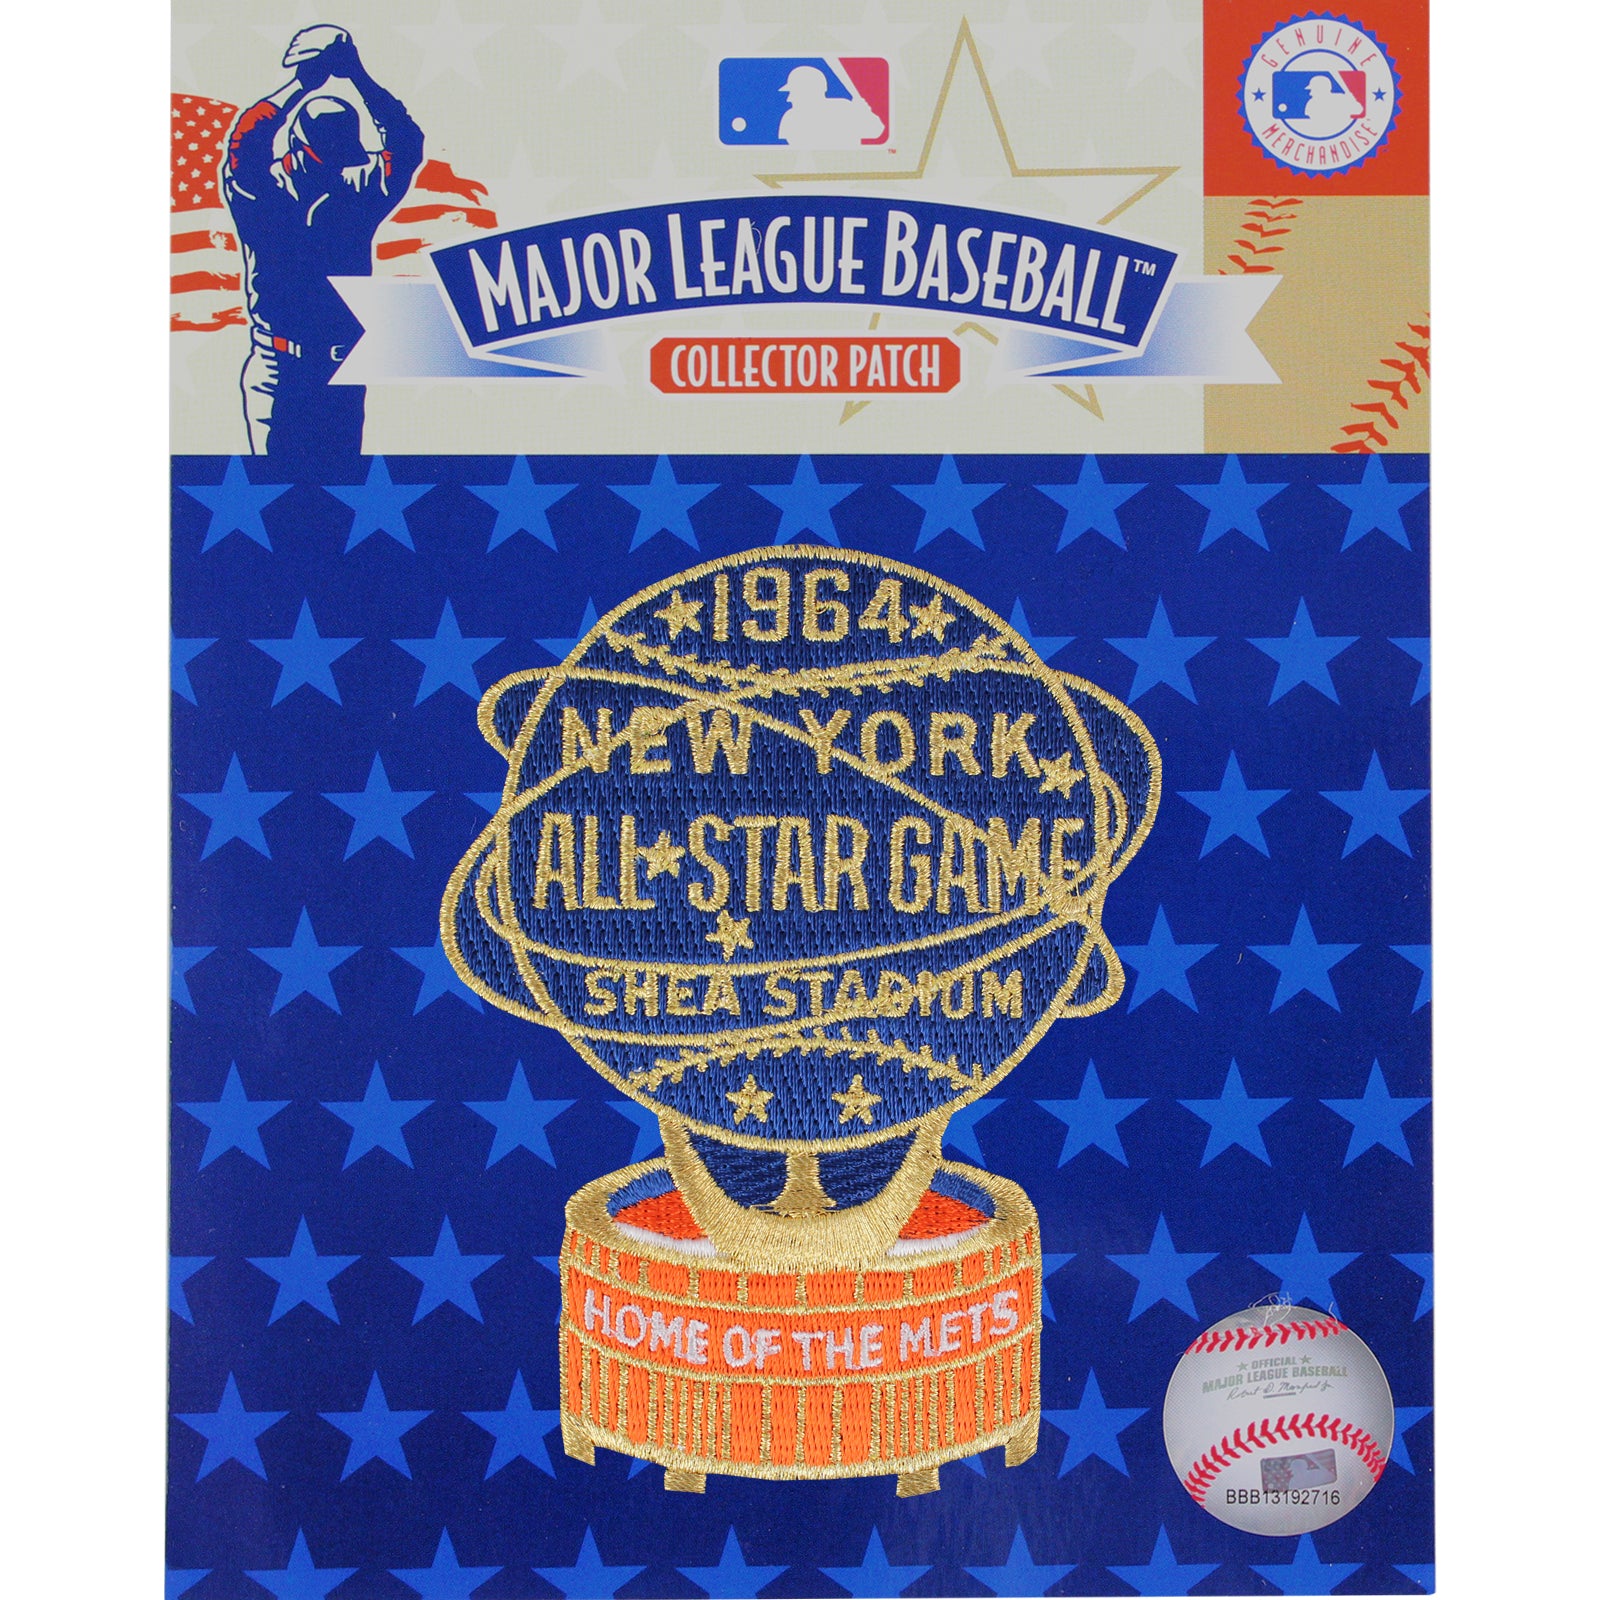 New York Mets All Star Game Baseball shirt